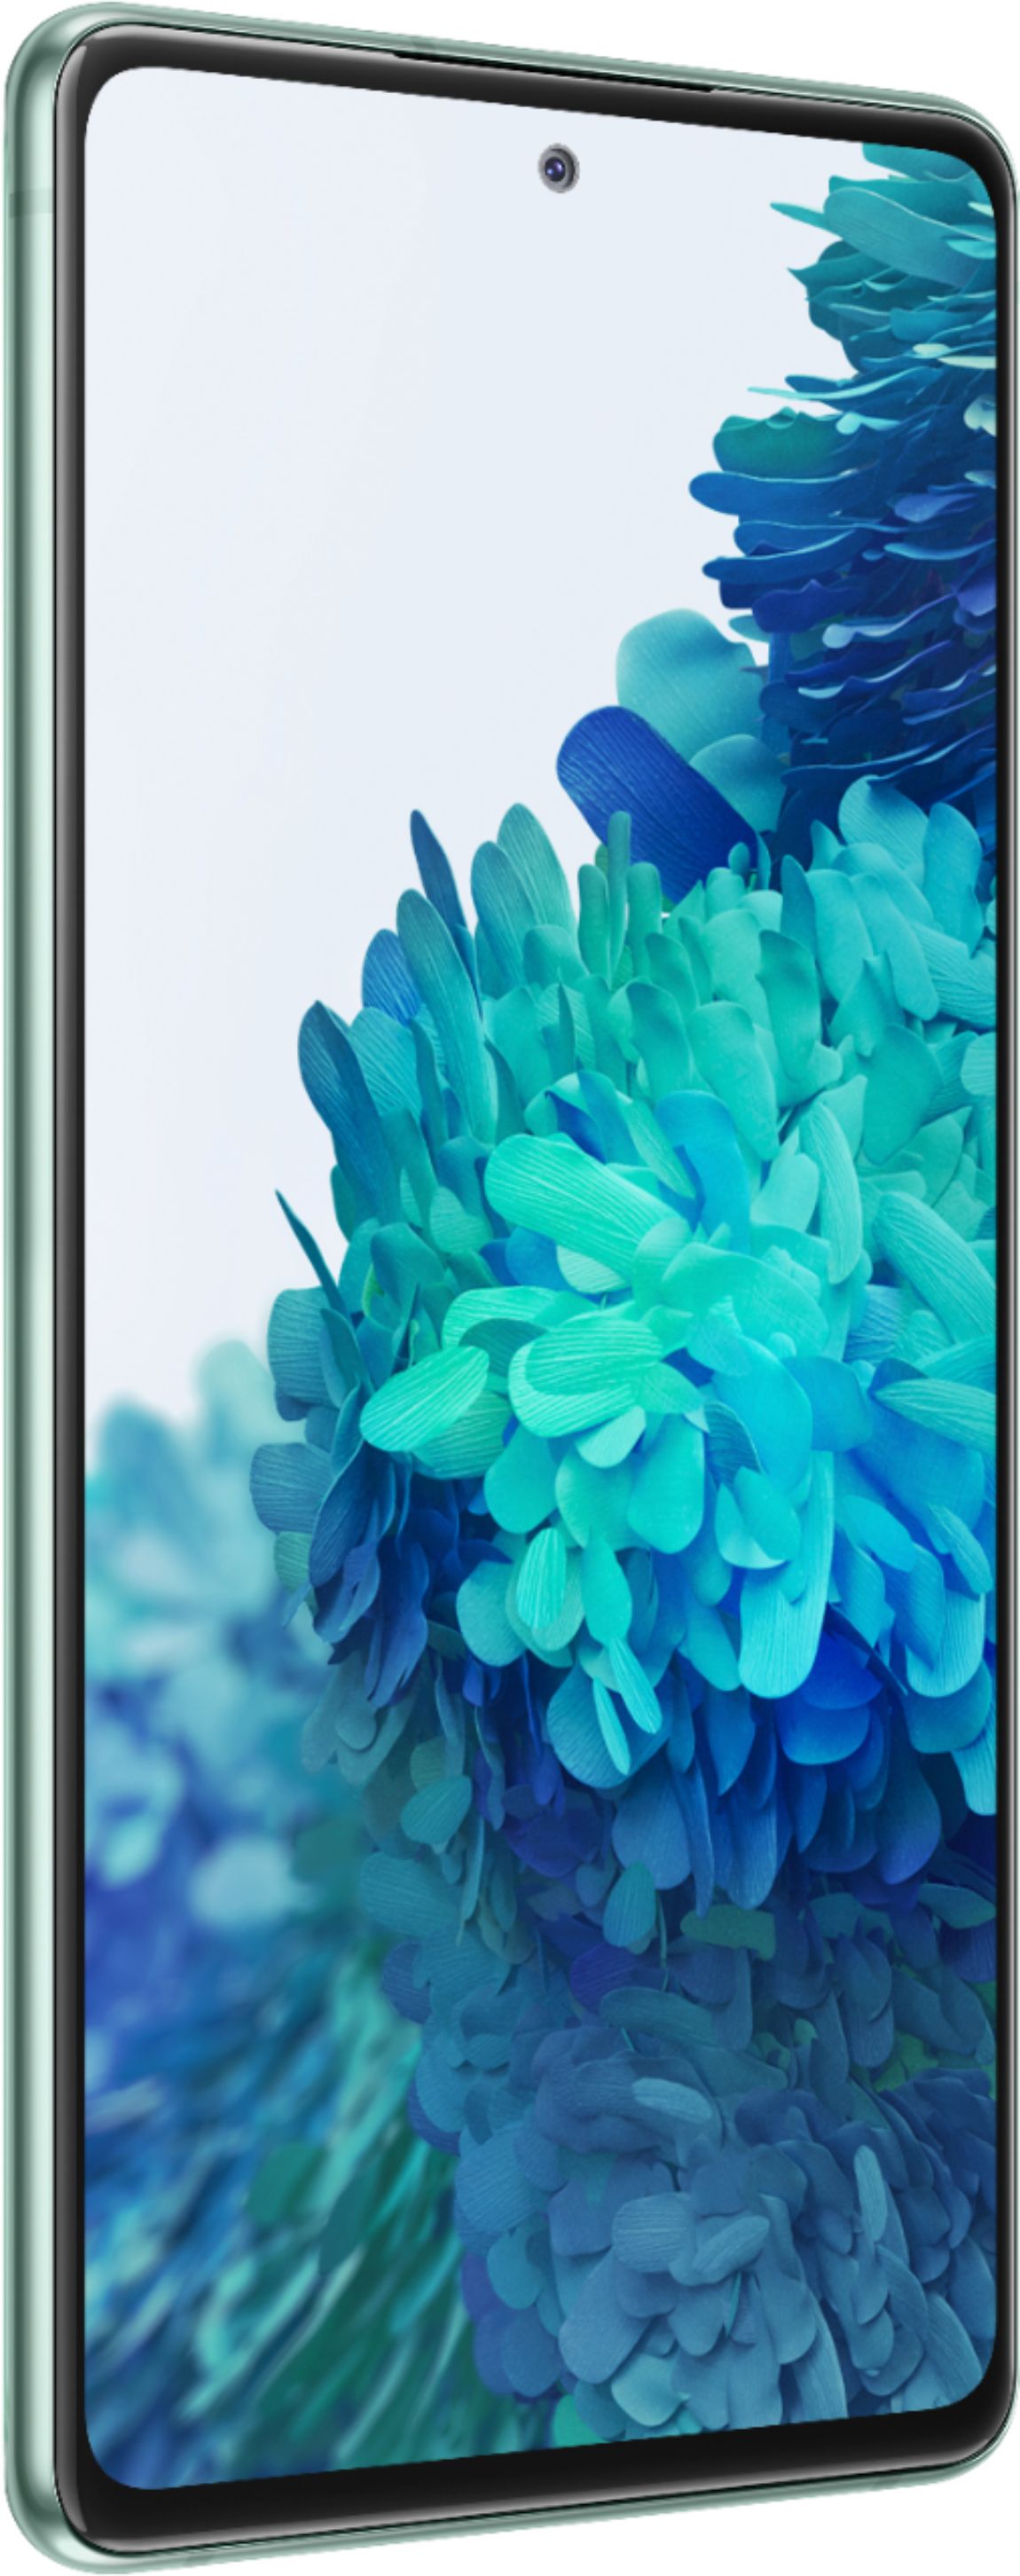 Samsung Galaxy S20 FE 5G UW brings fan-favorite features to Verizon  customers, News Release